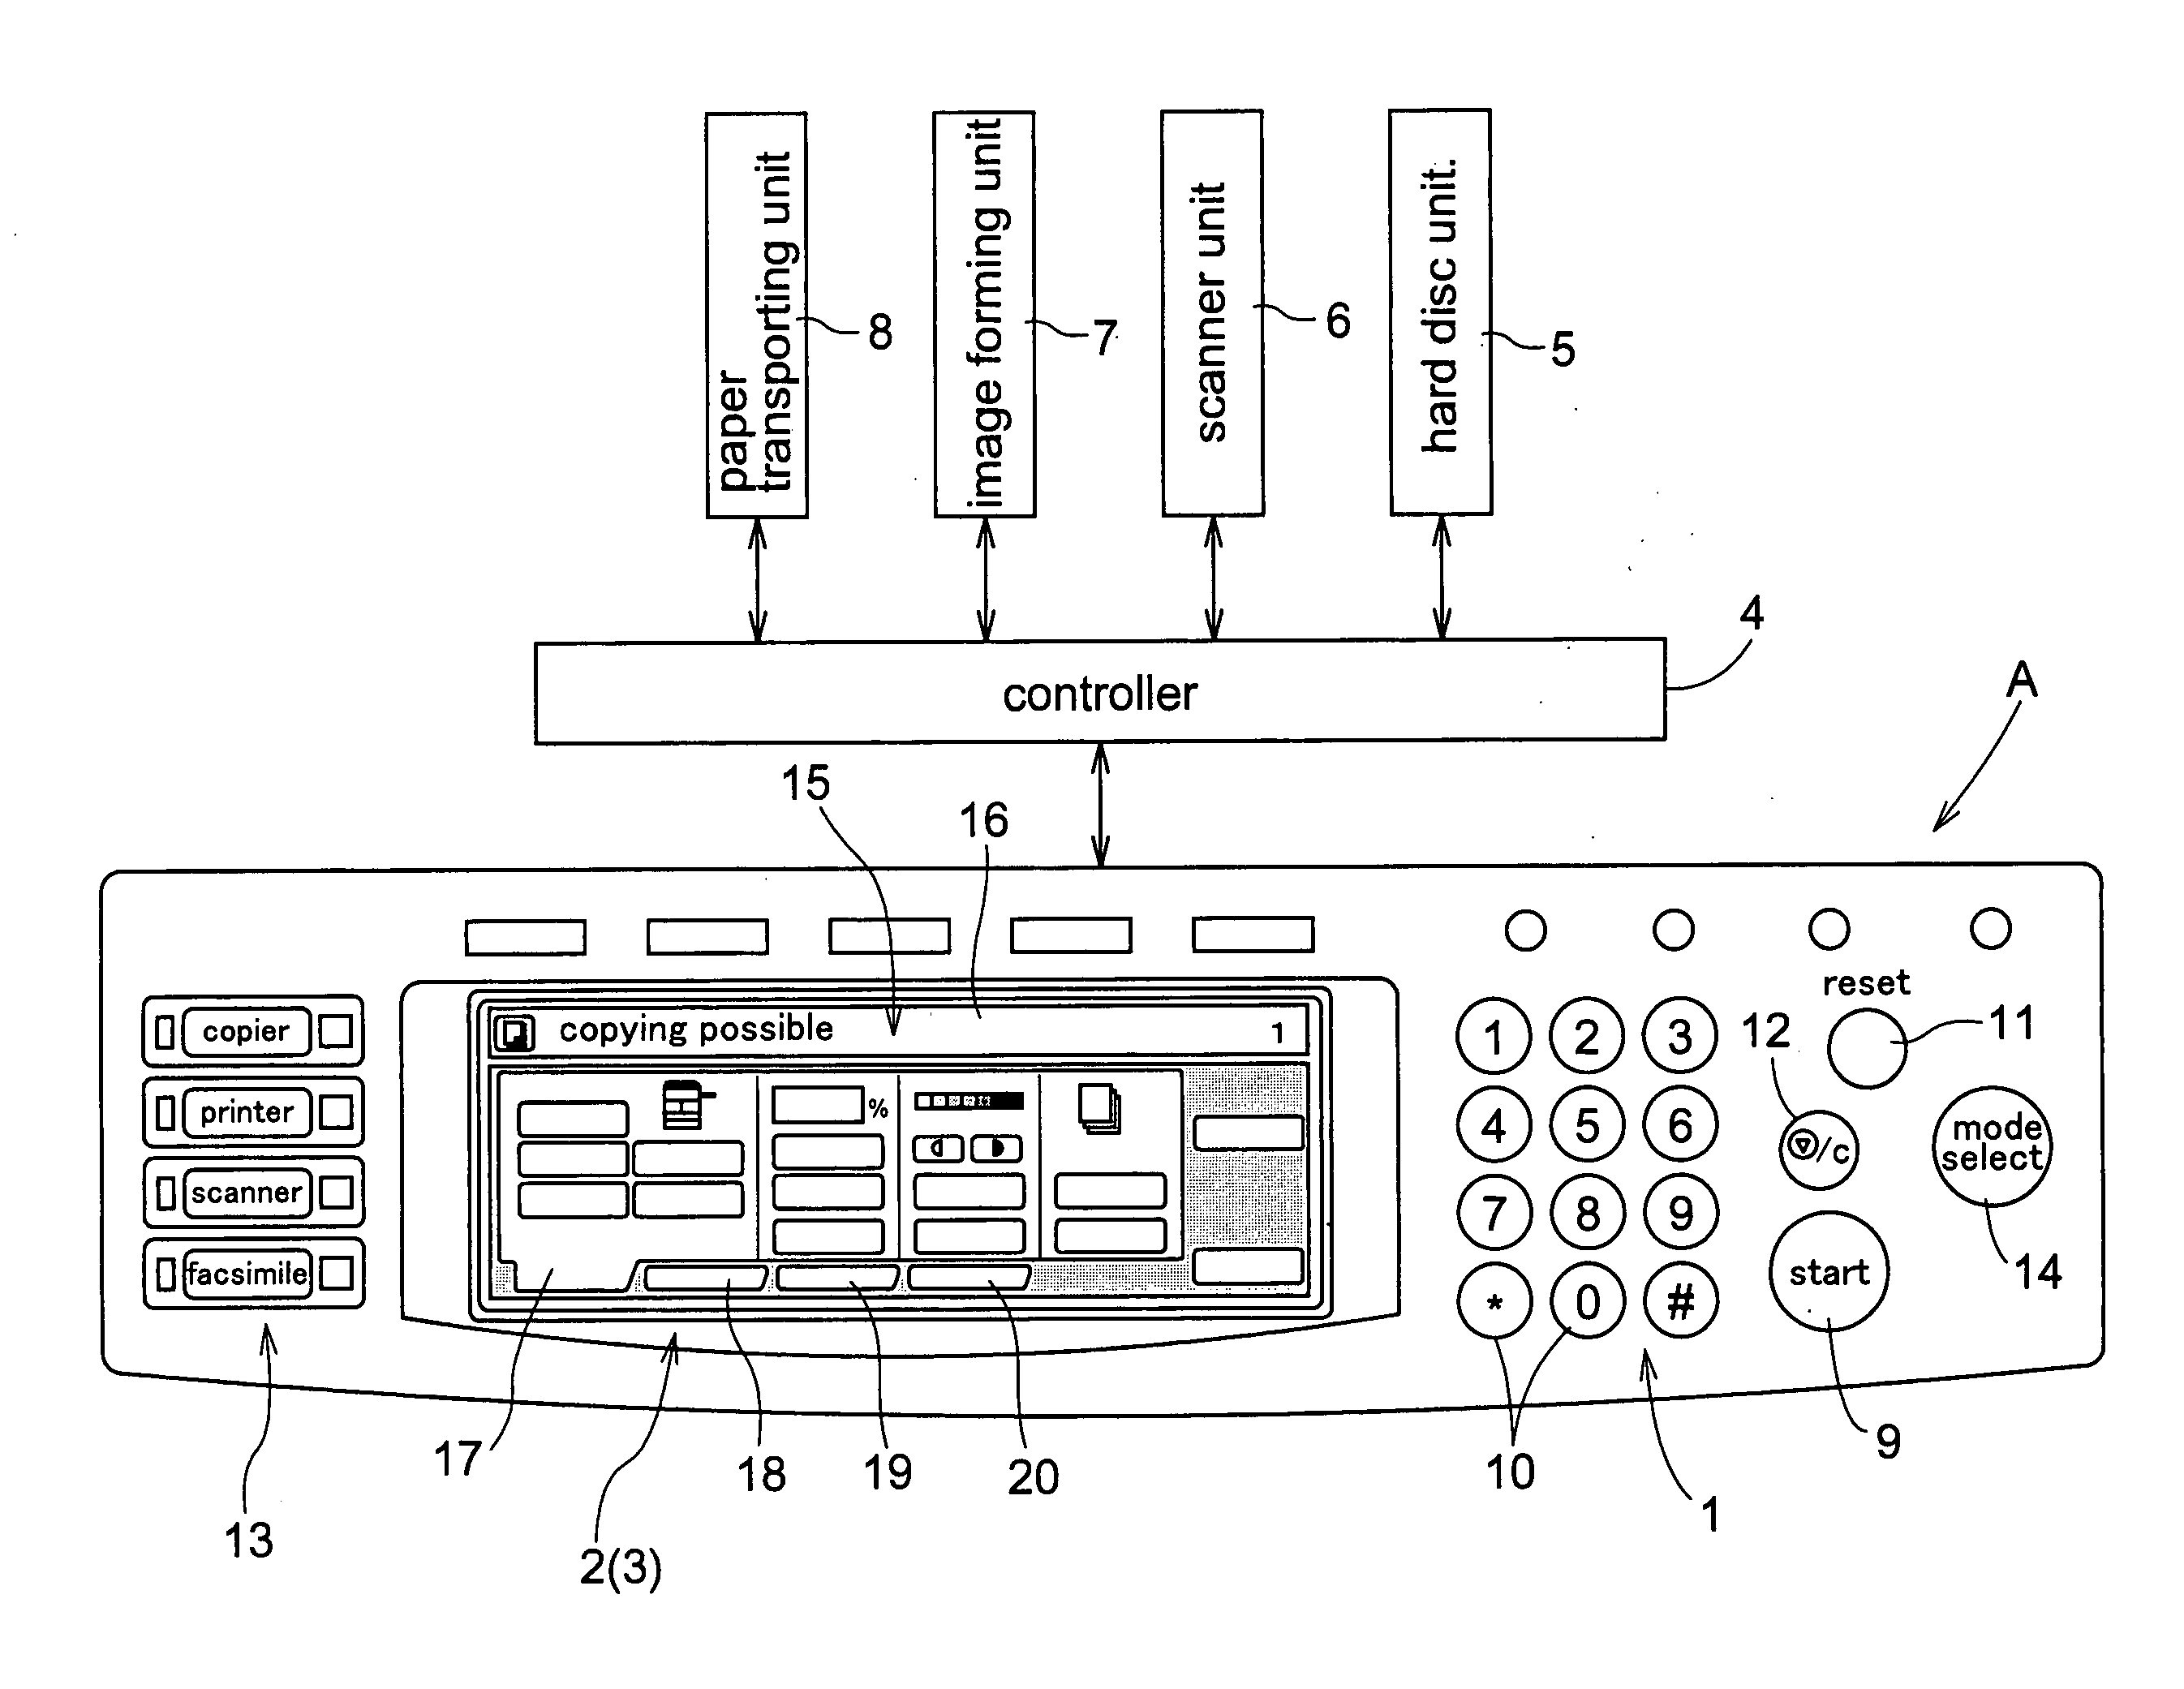 Control panel apparatus